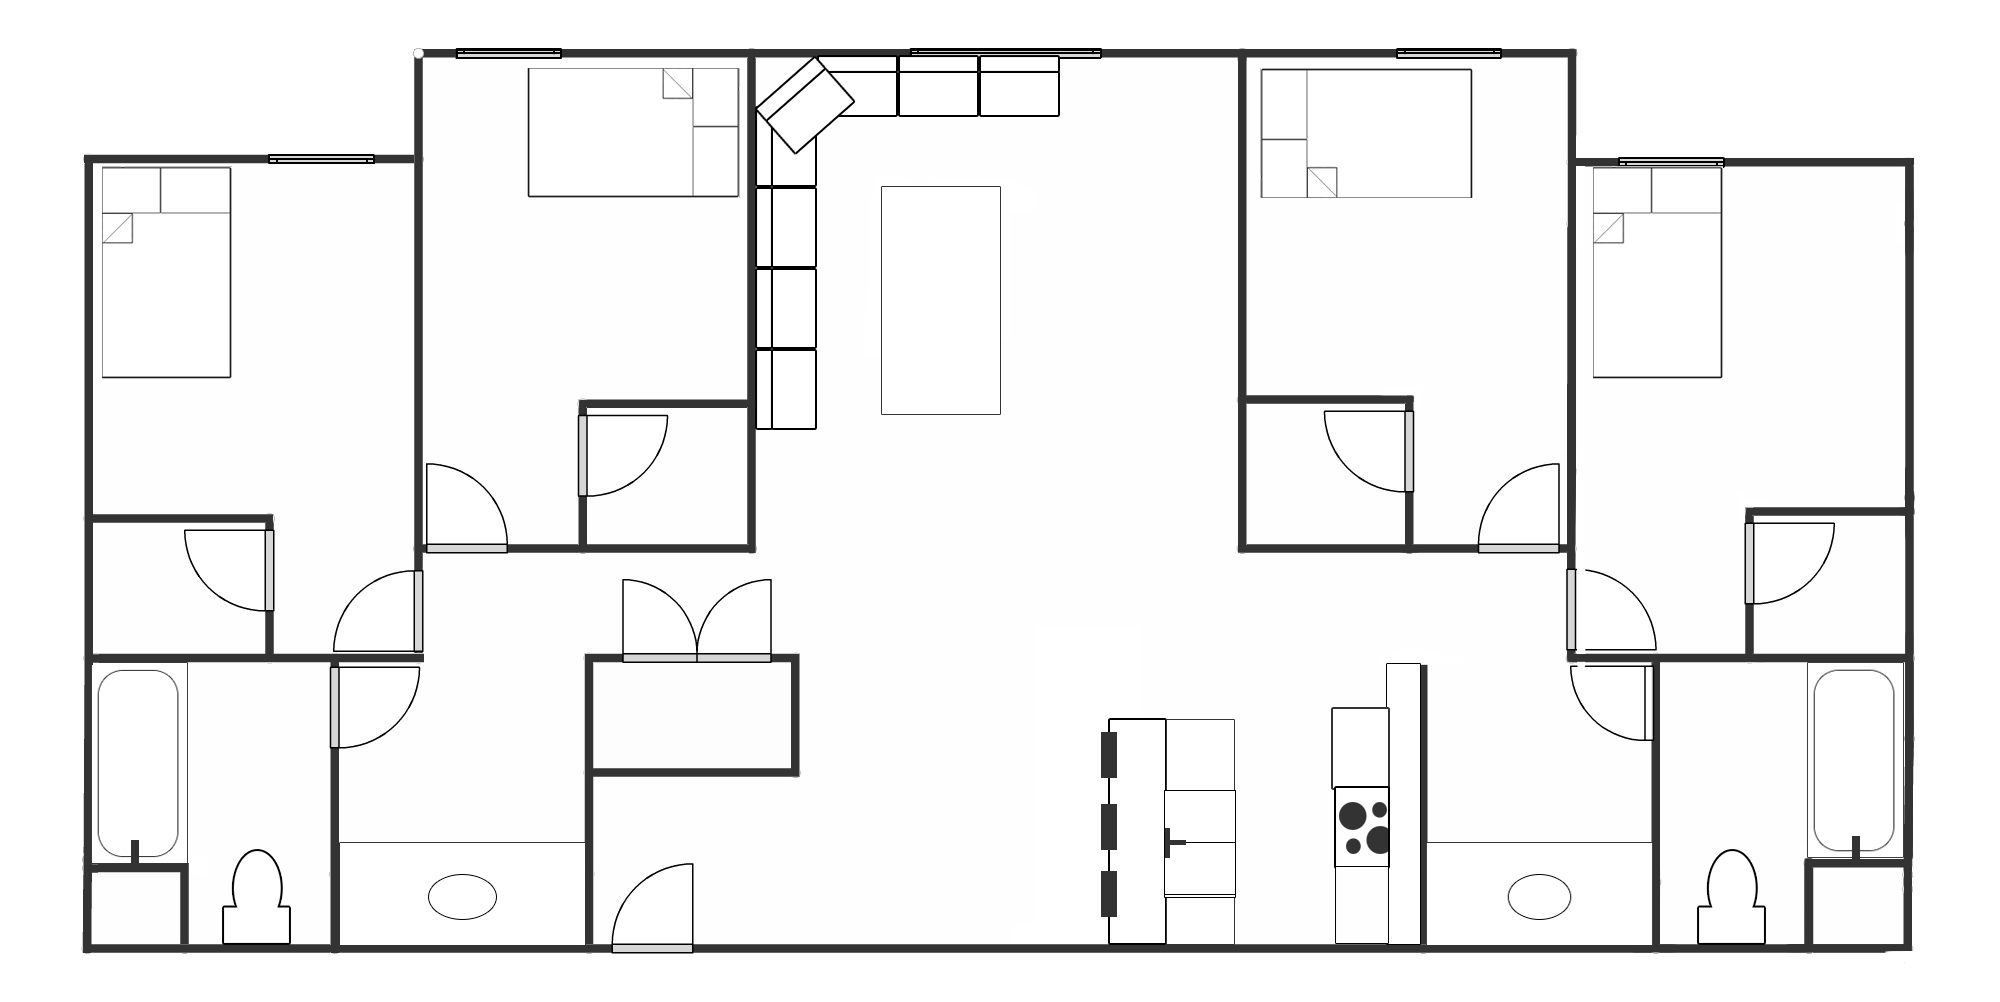 Sundance Court four bedroom, two bathroom blueprint layout.